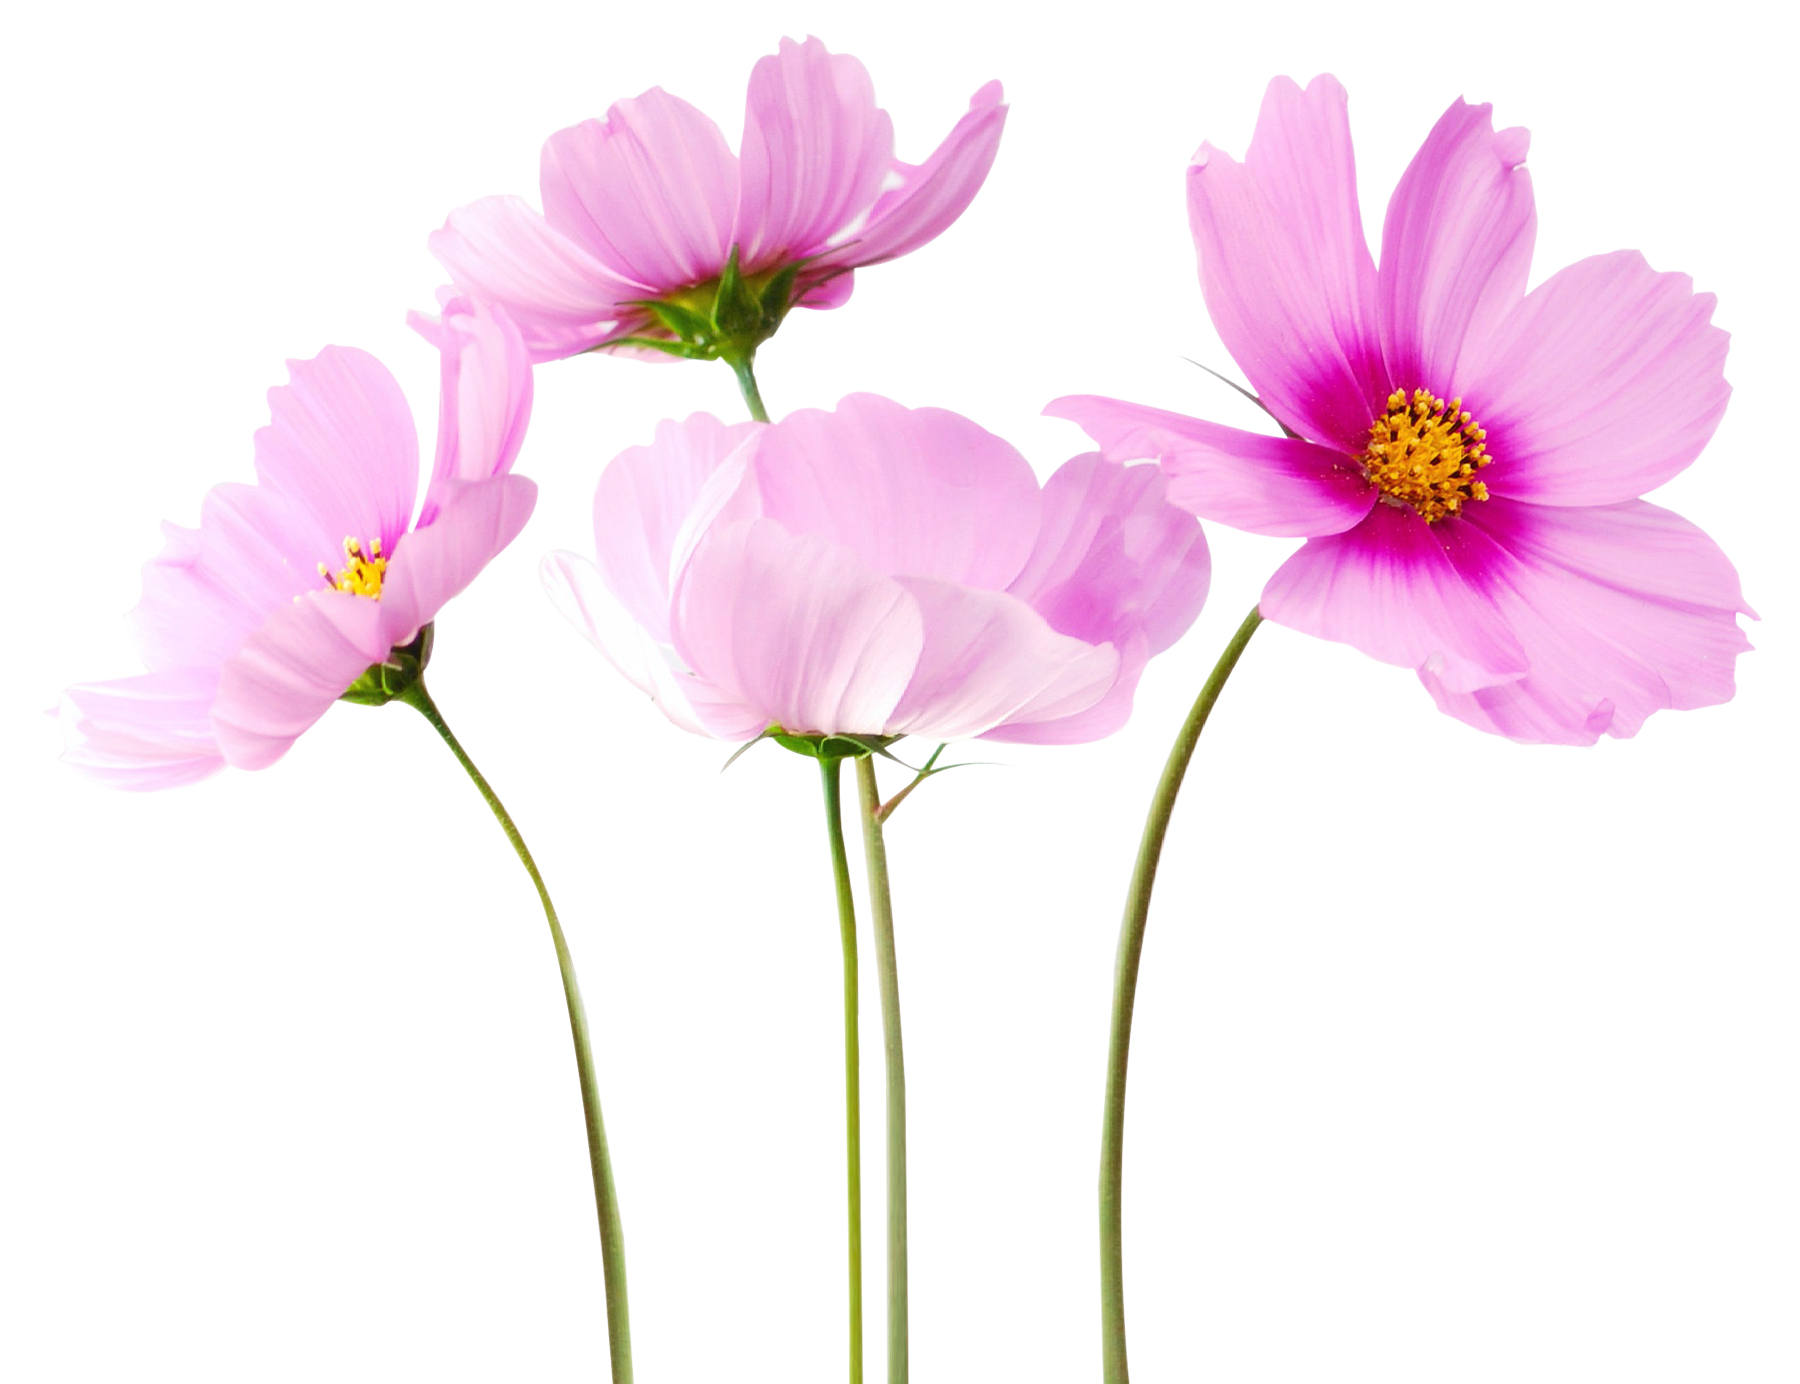 Cosmea Flower PNG Image - PurePNG | Free transparent CC0 ...